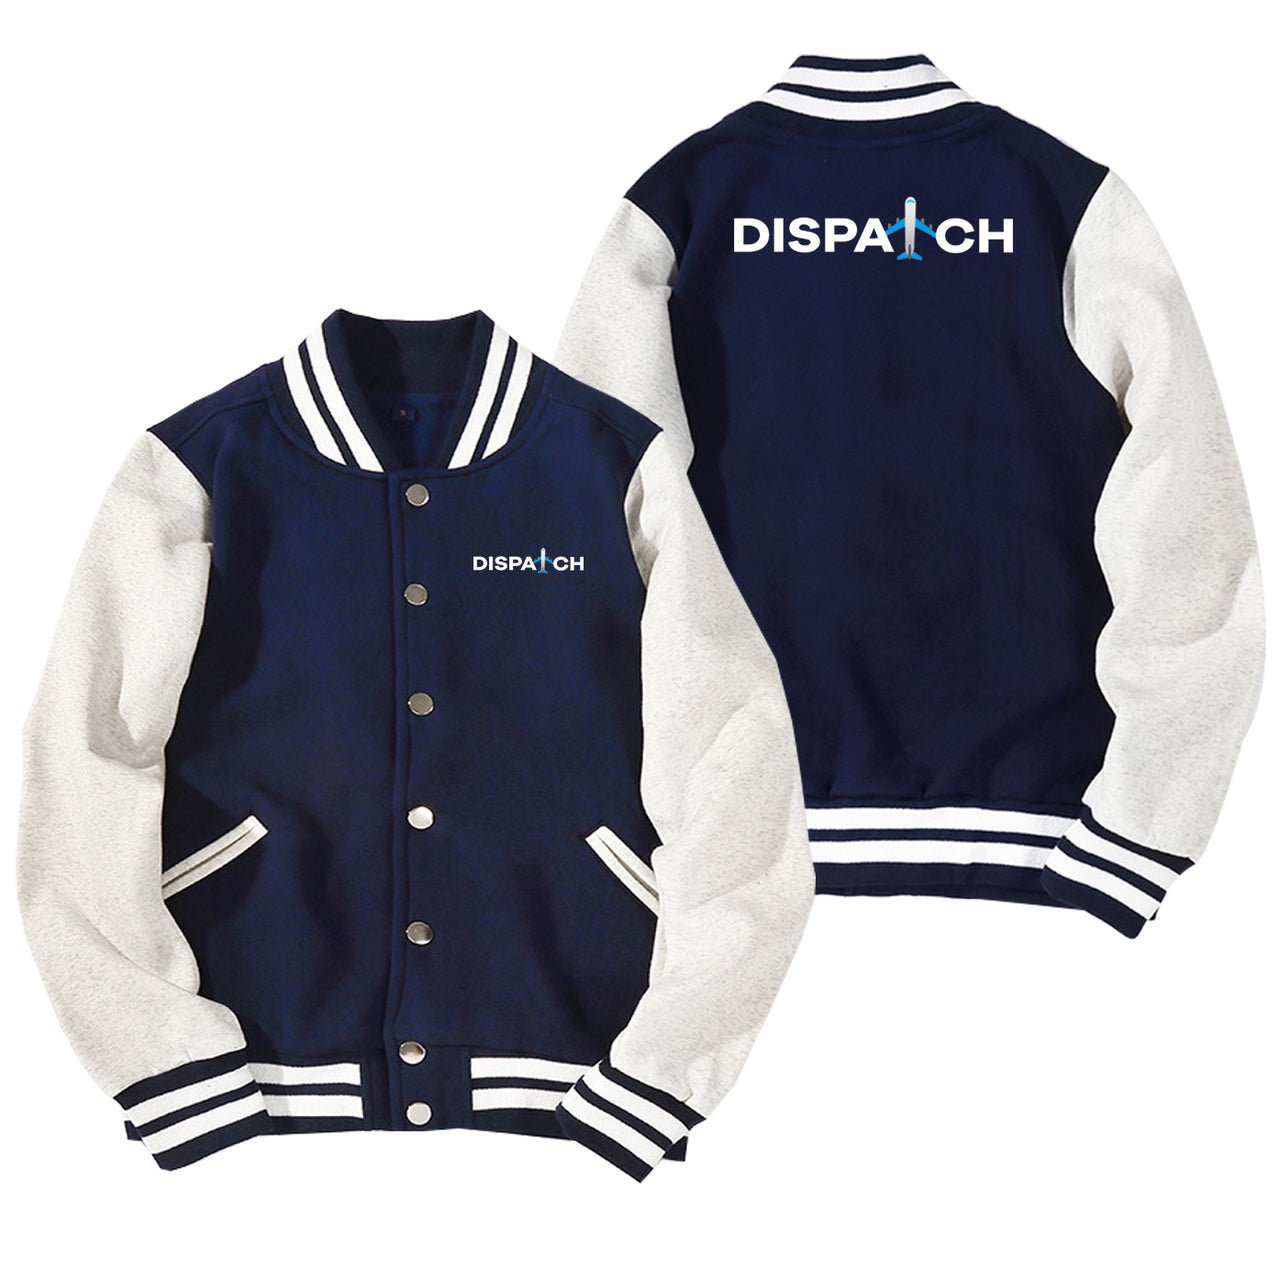 Dispatch Designed Baseball Style Jackets